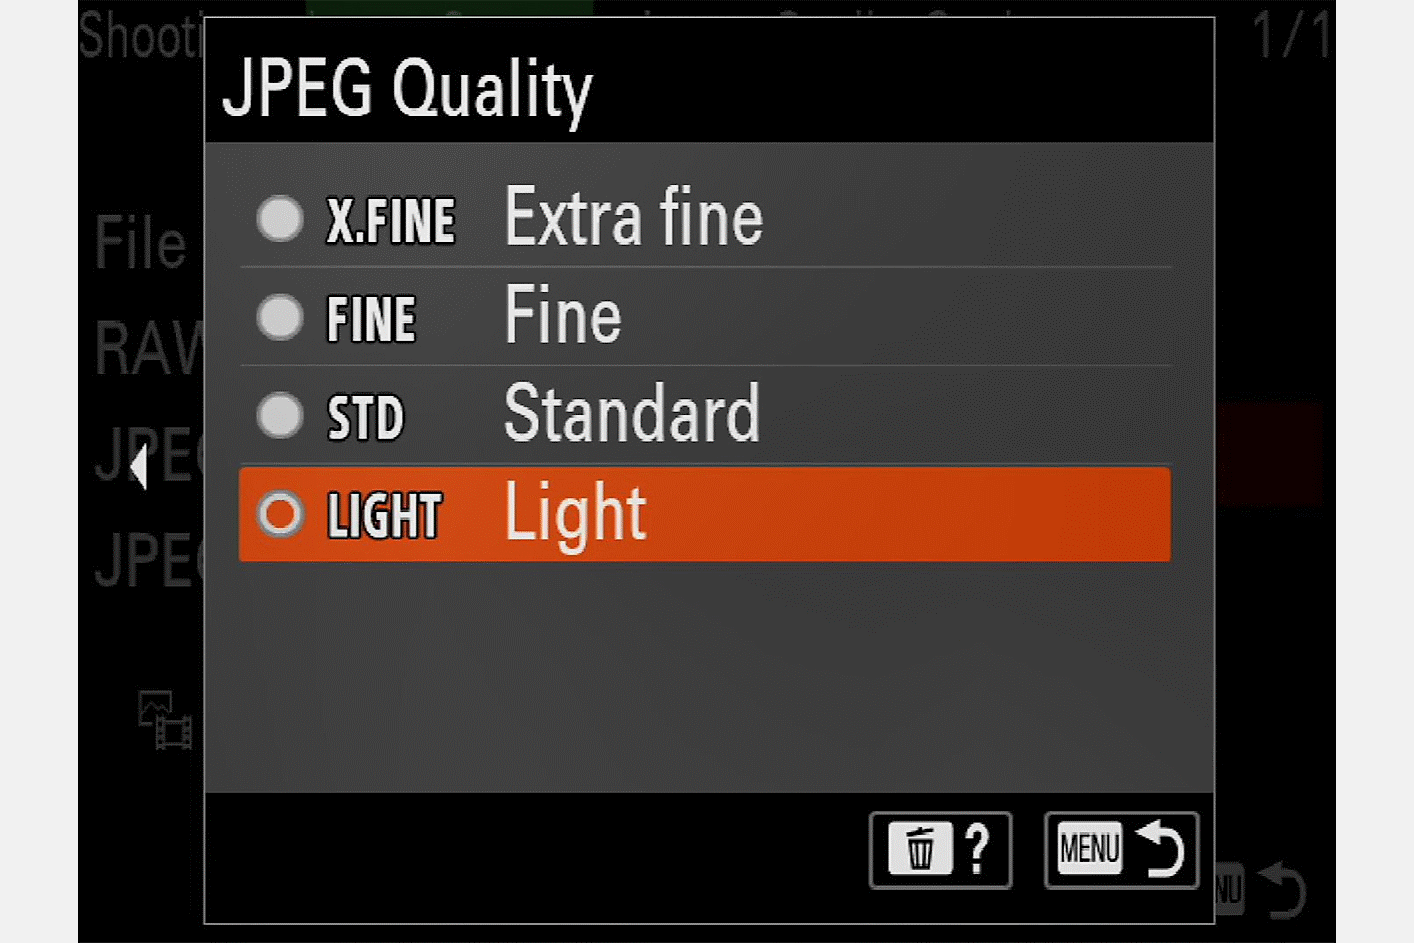 "JPEG Quality" camera menu with cursor on "Light"